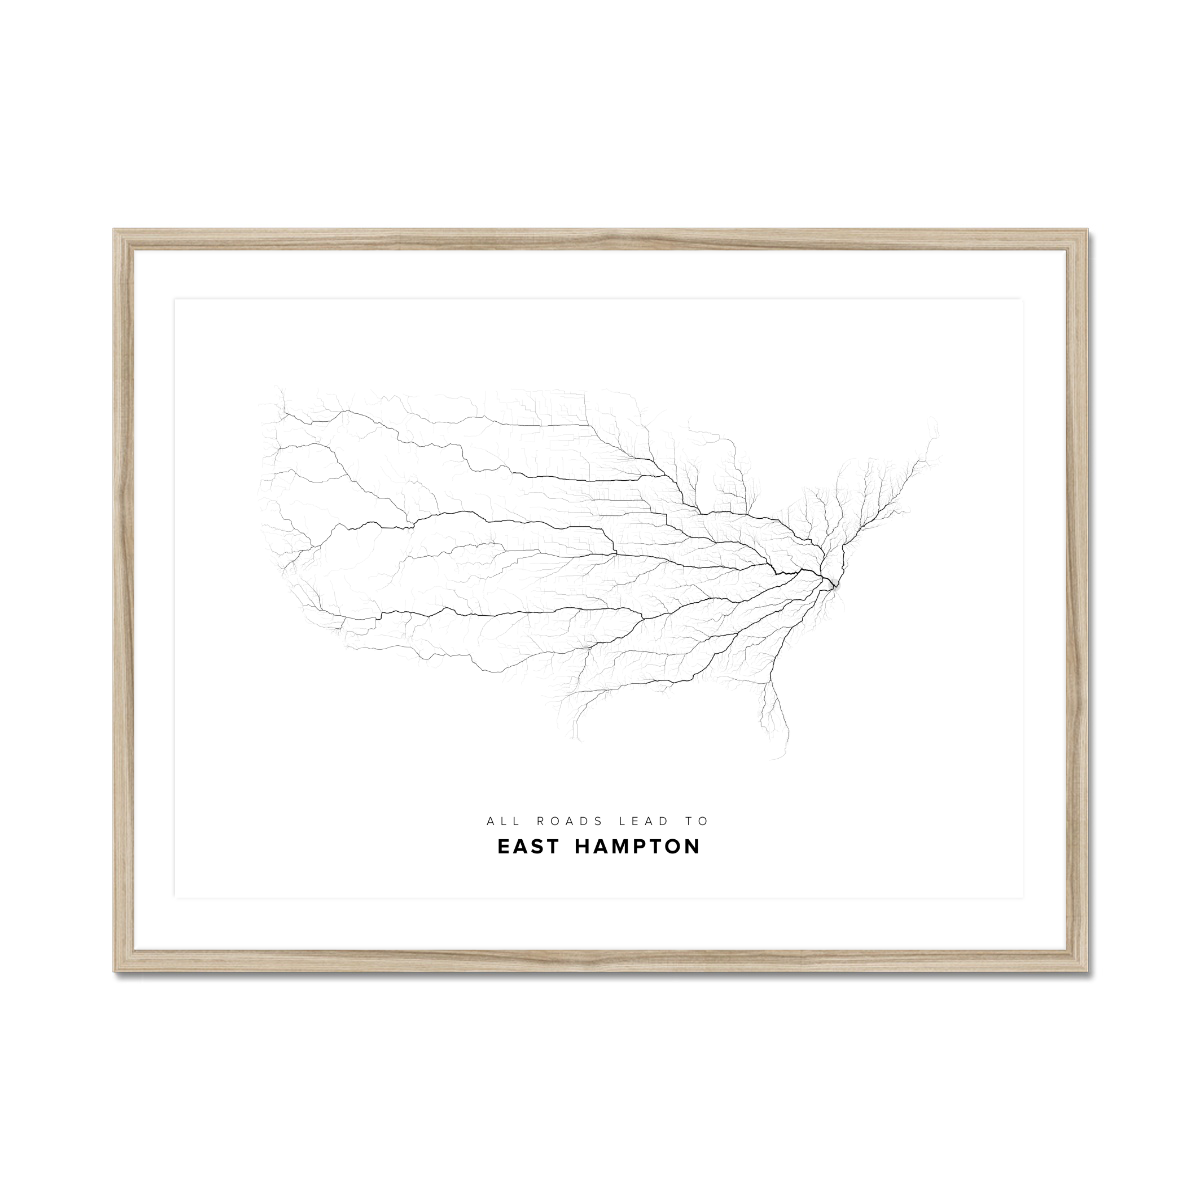 All roads lead to East Hampton (United States of America) Fine Art Map Print